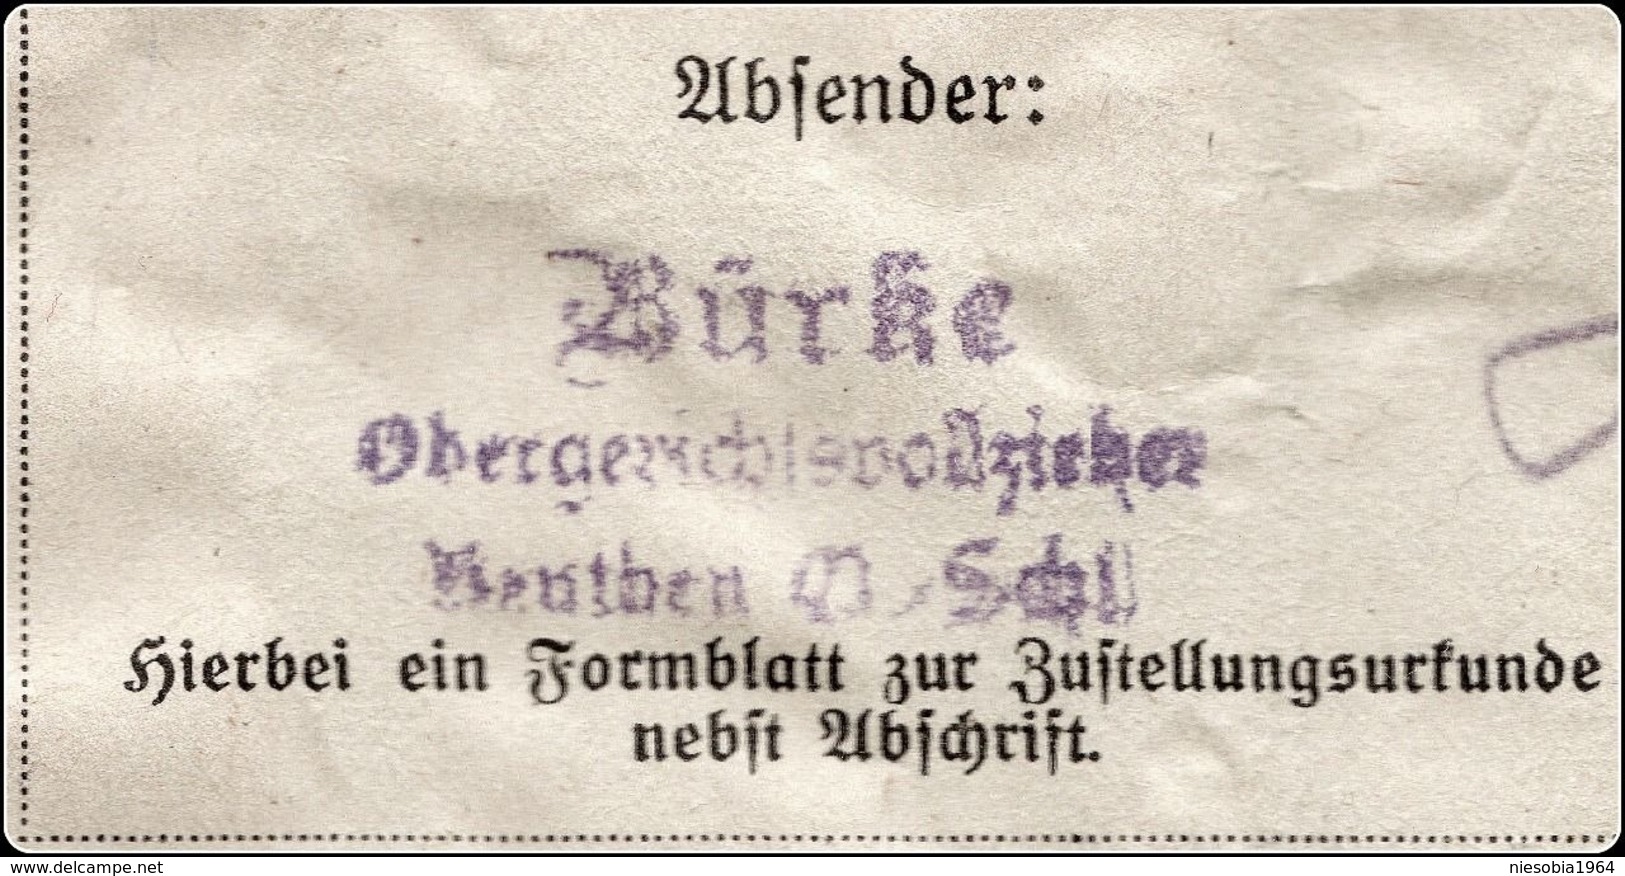 WW2 Obergerichtvollzieher Bürke - Beuthen Court documents - Bürke - Main Court Bailiff case Jarzombek vs Jarzombek 1941